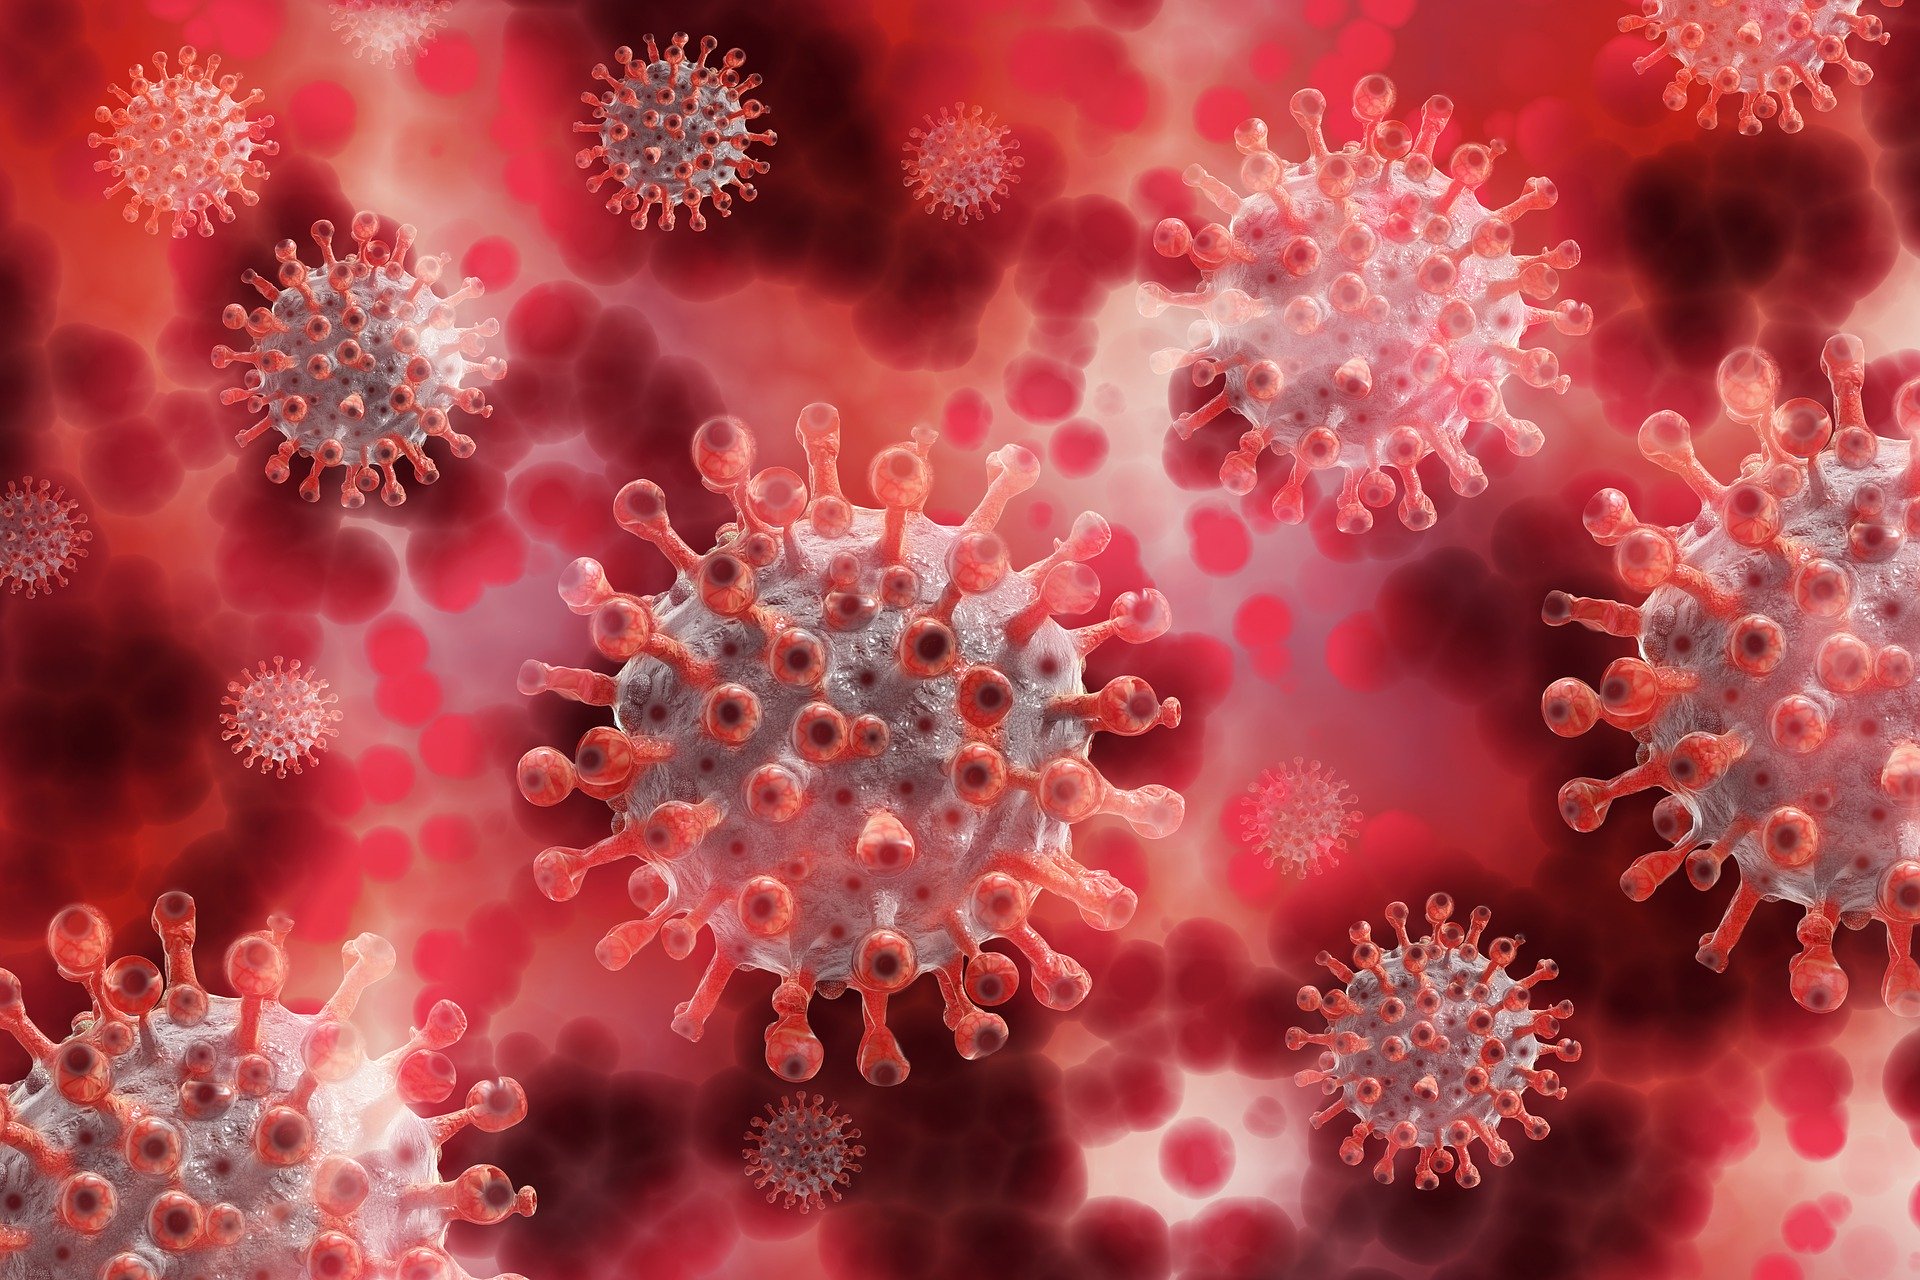 Coronavirus: in Toscana 574 nuovi casi, età media 49 anni. 35 decessi